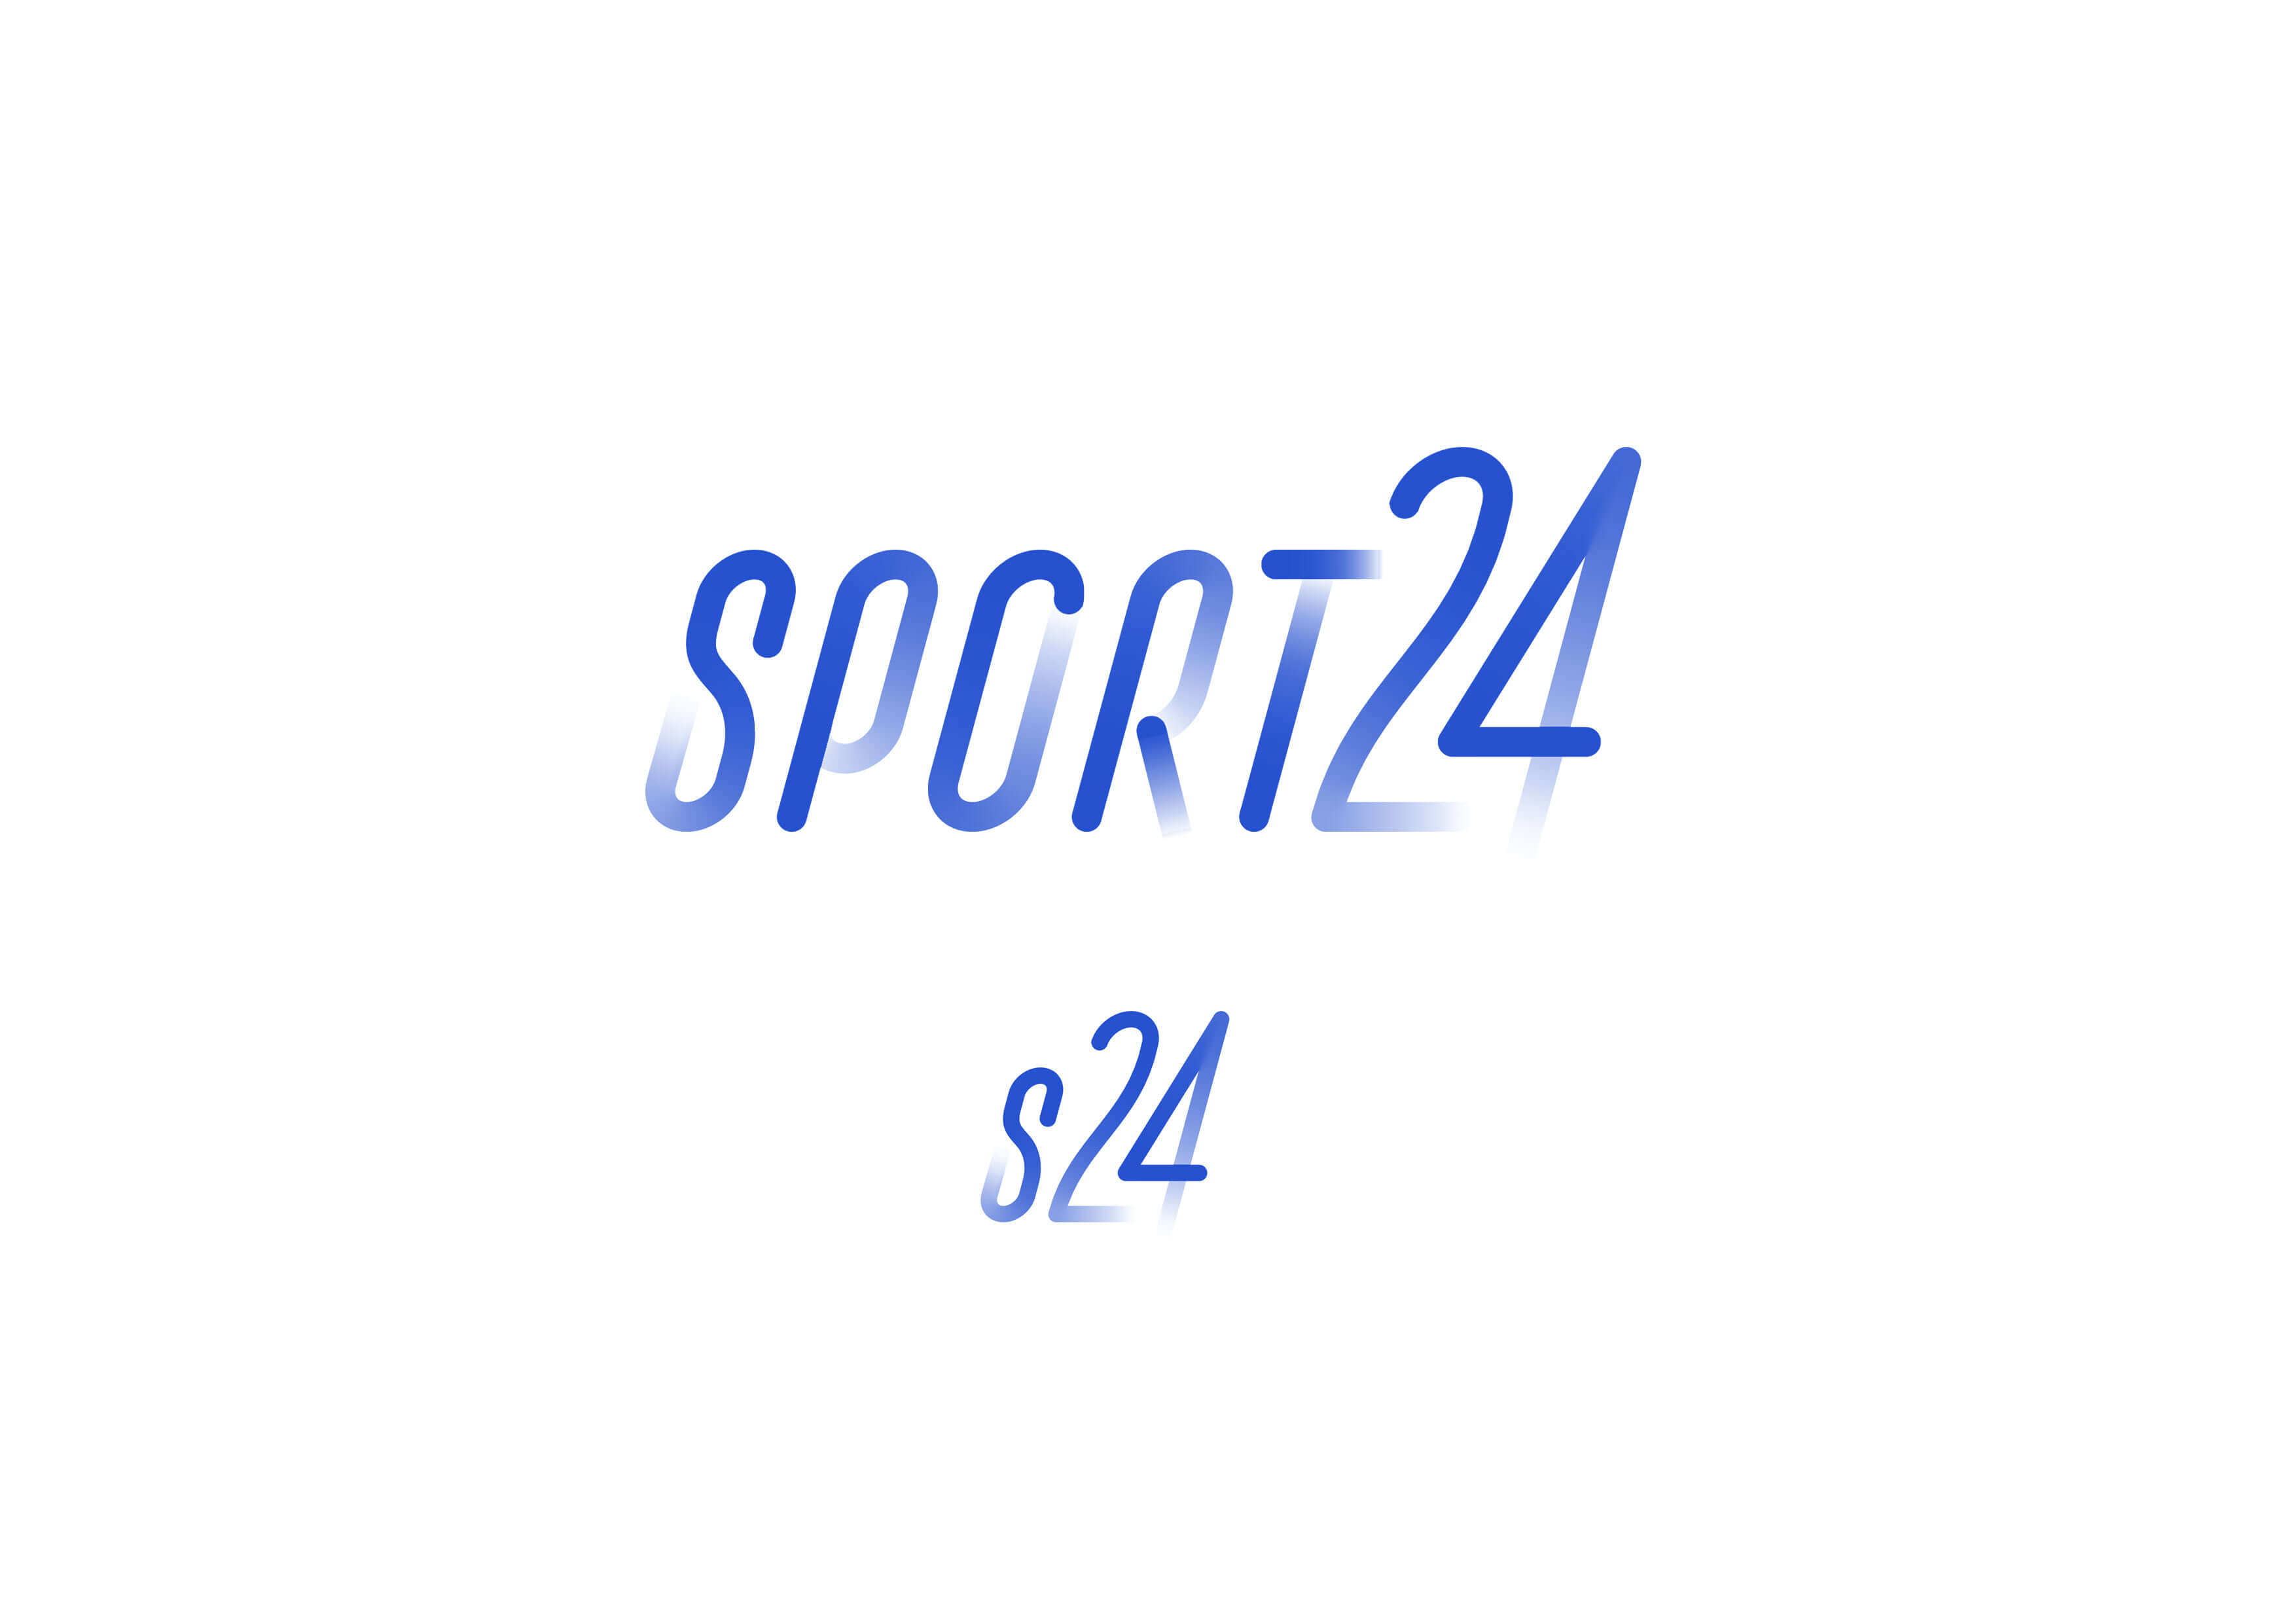 sport24 identity process 05